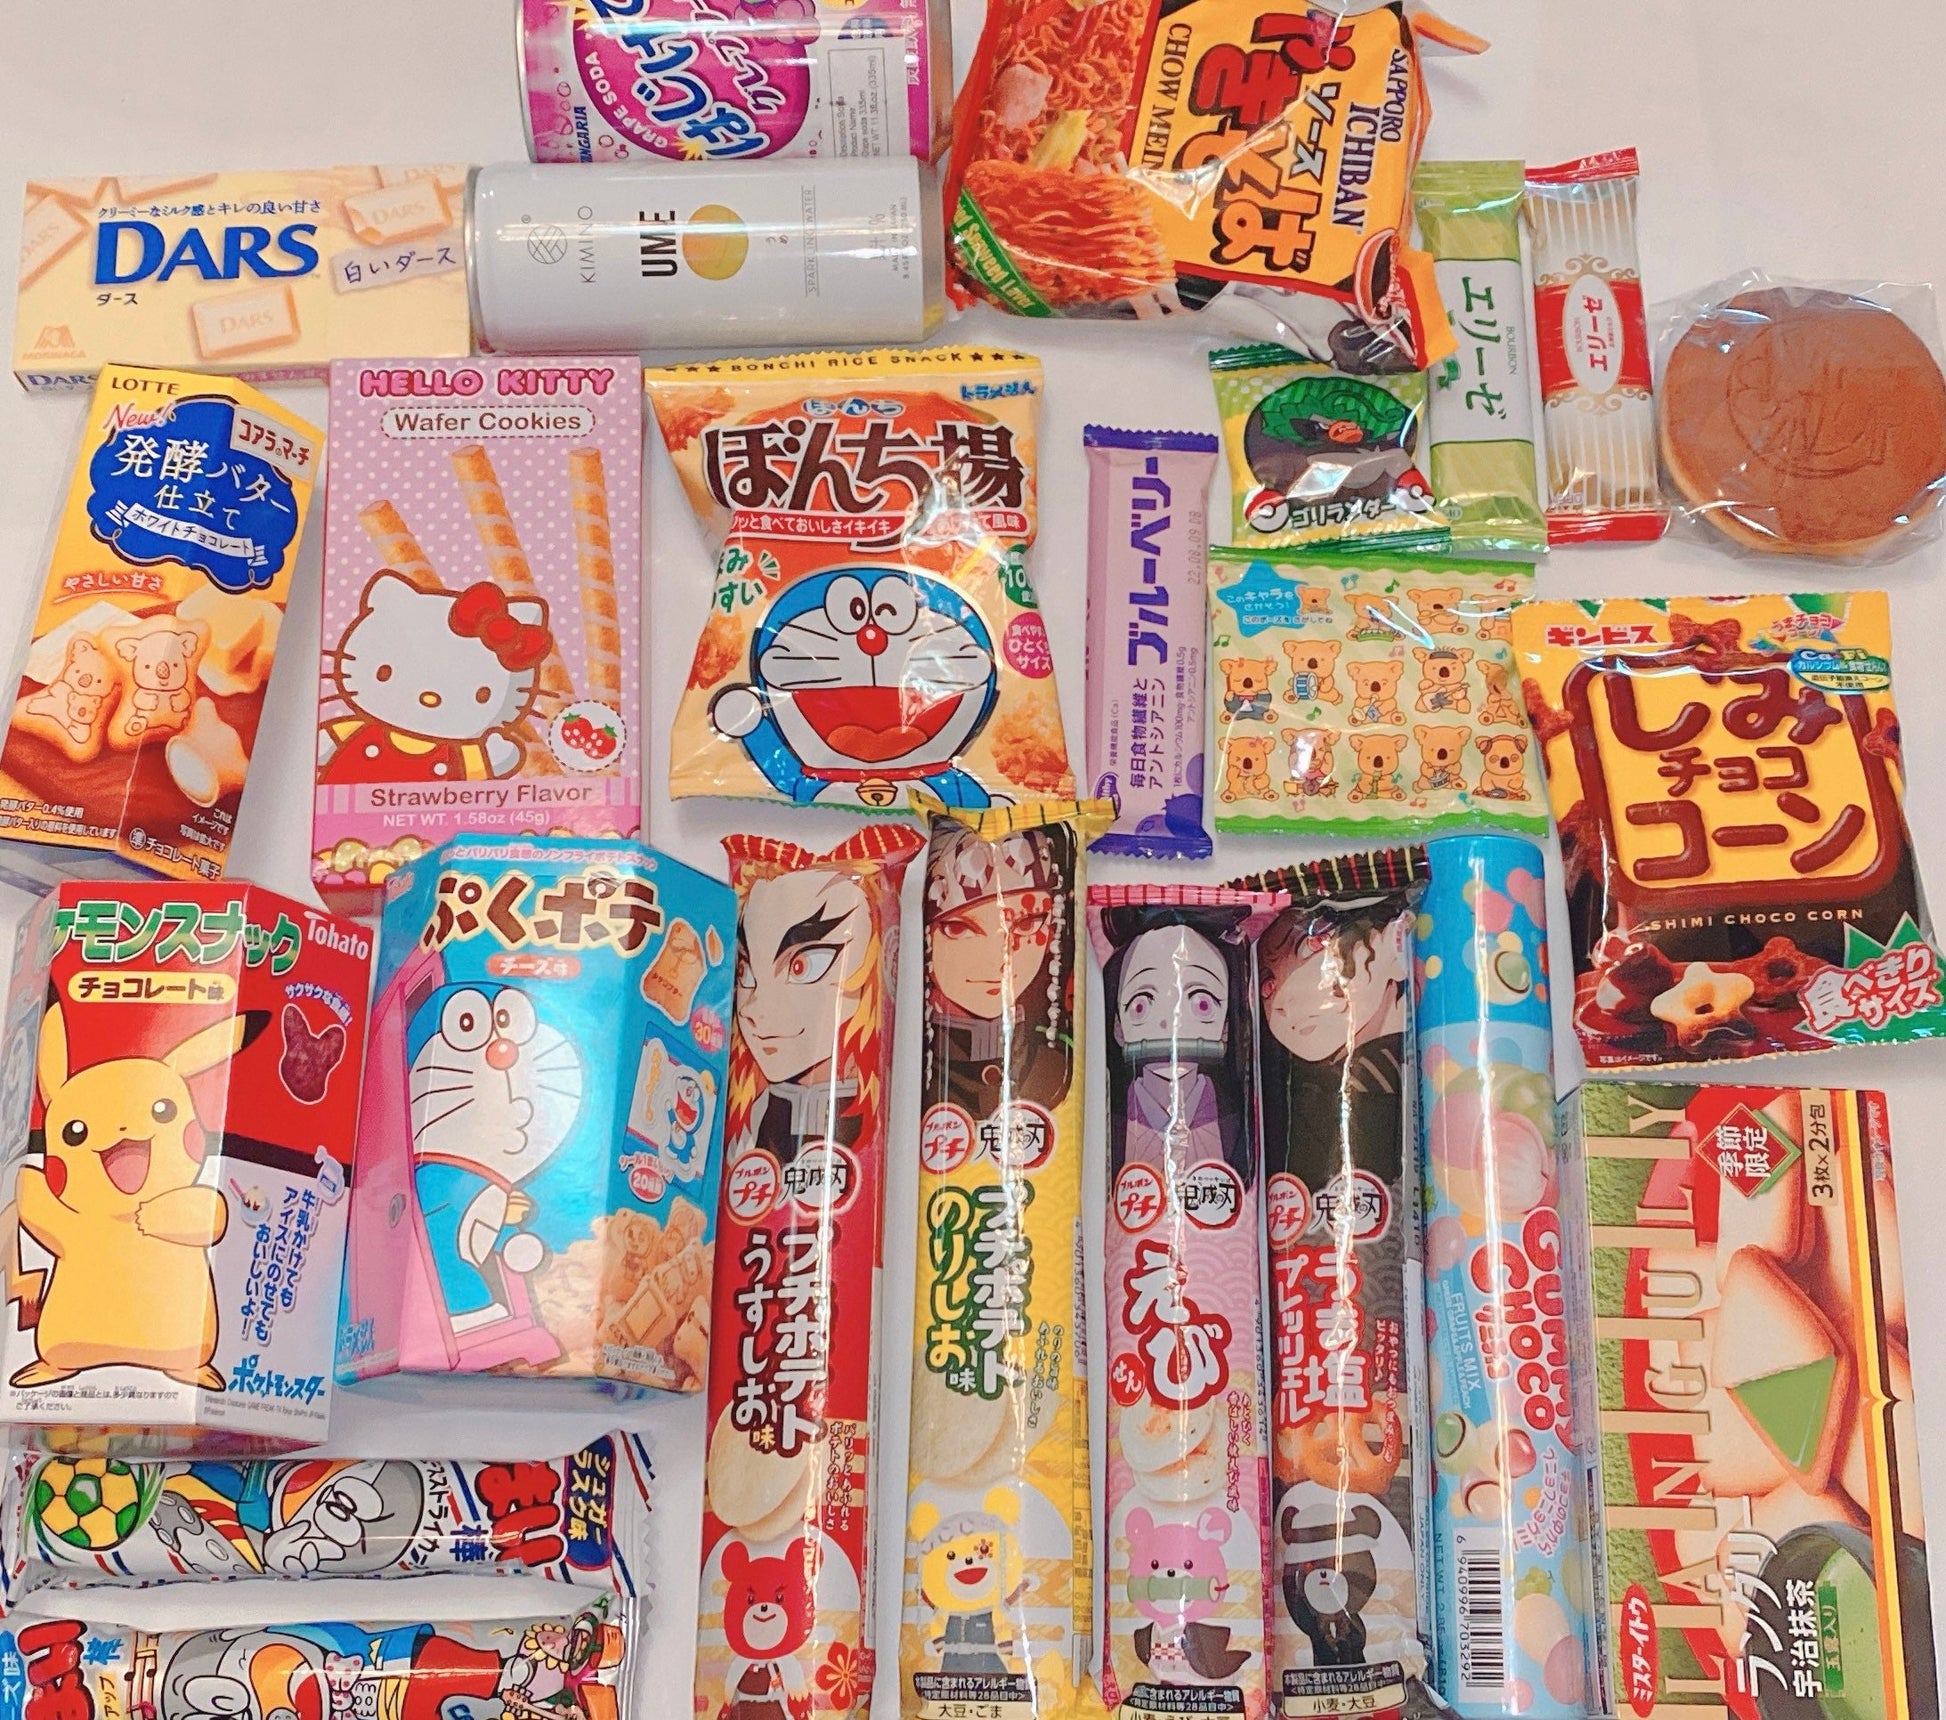 Exotic Japanese Snacks w/ drink and ramen – DiaSnacks